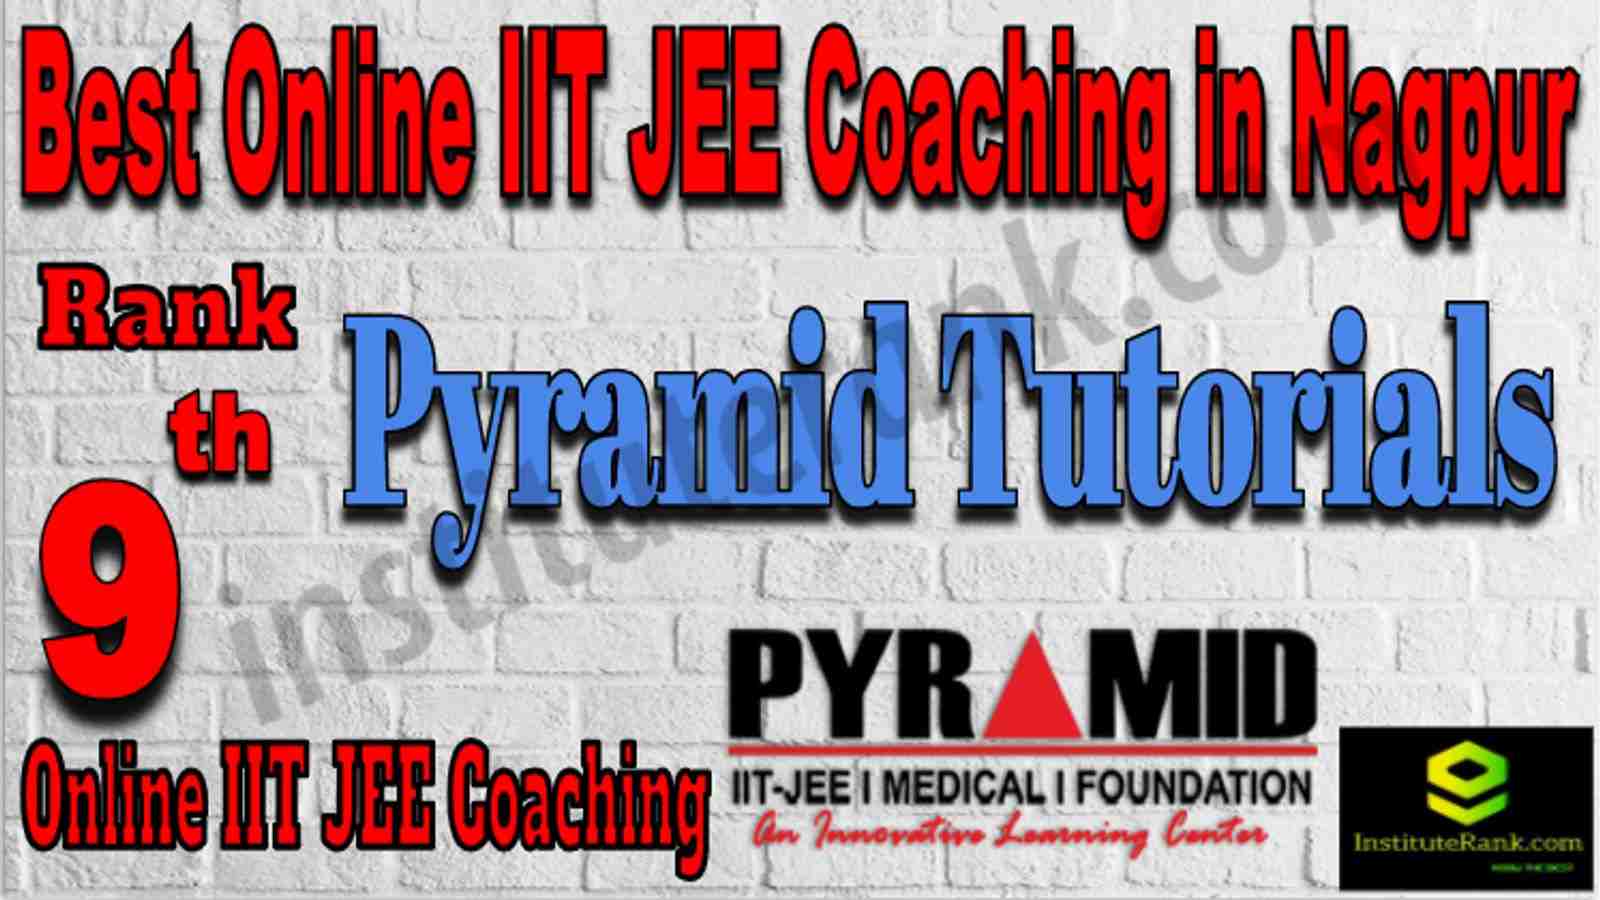 Rank 9 Best Online IIT JEE Coaching in Nagpur